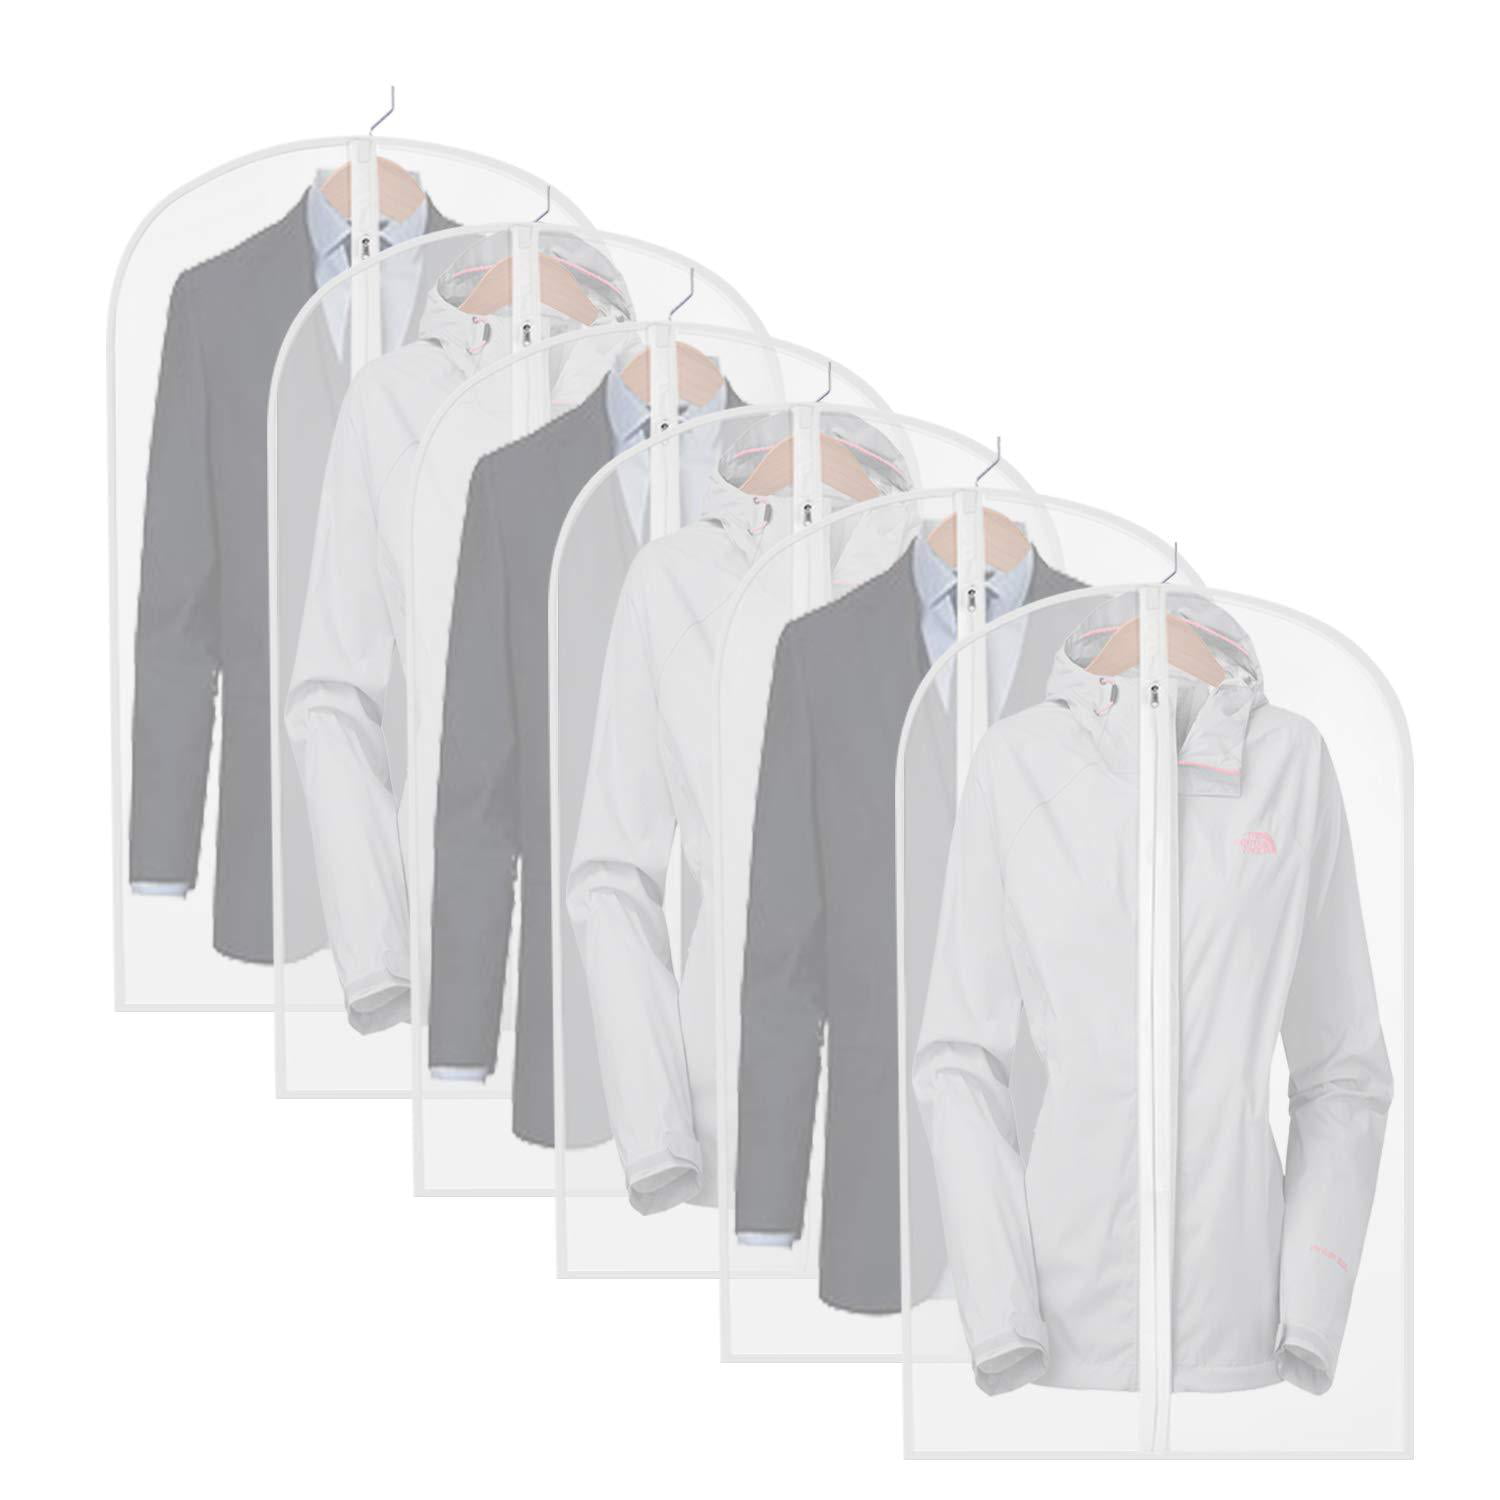 homeminda Garment Bags Clear,40in Moth Proof Garment Bag, White Hanging Lightweight Breathable ...